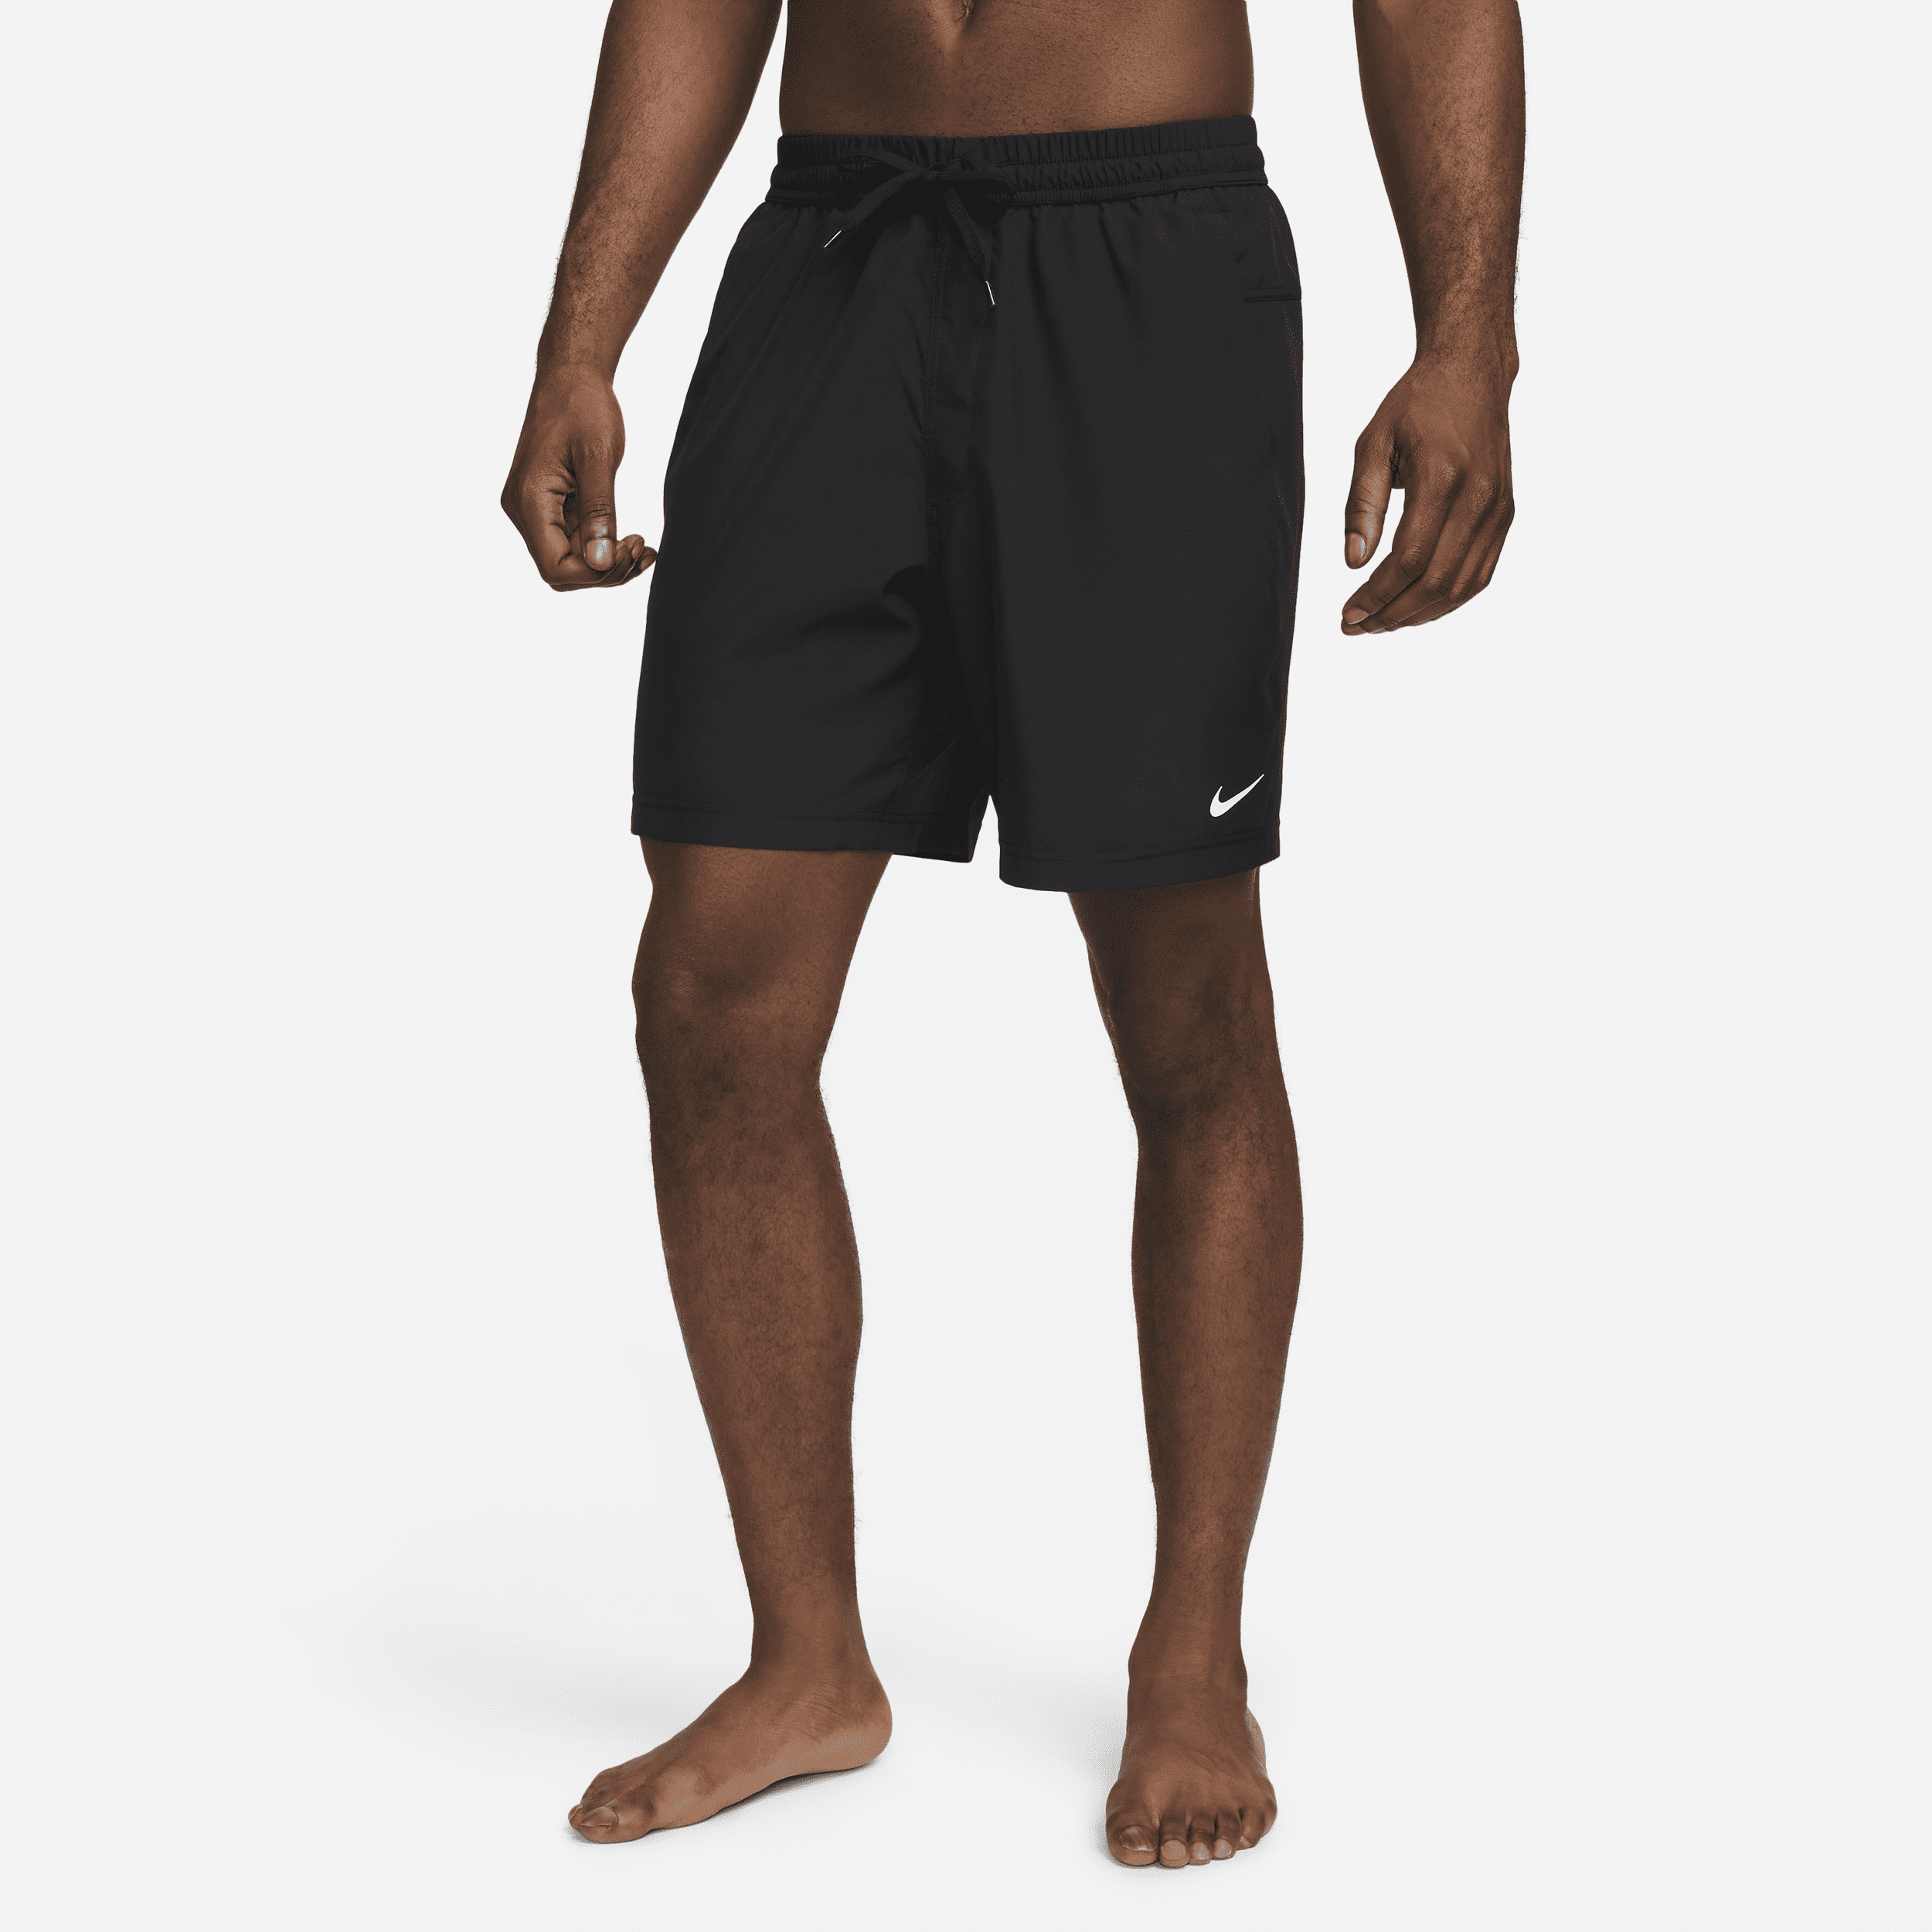 Nike Form Pantalón corto Dri-FIT versátil de 18 cm sin forro - Hombre - Negro